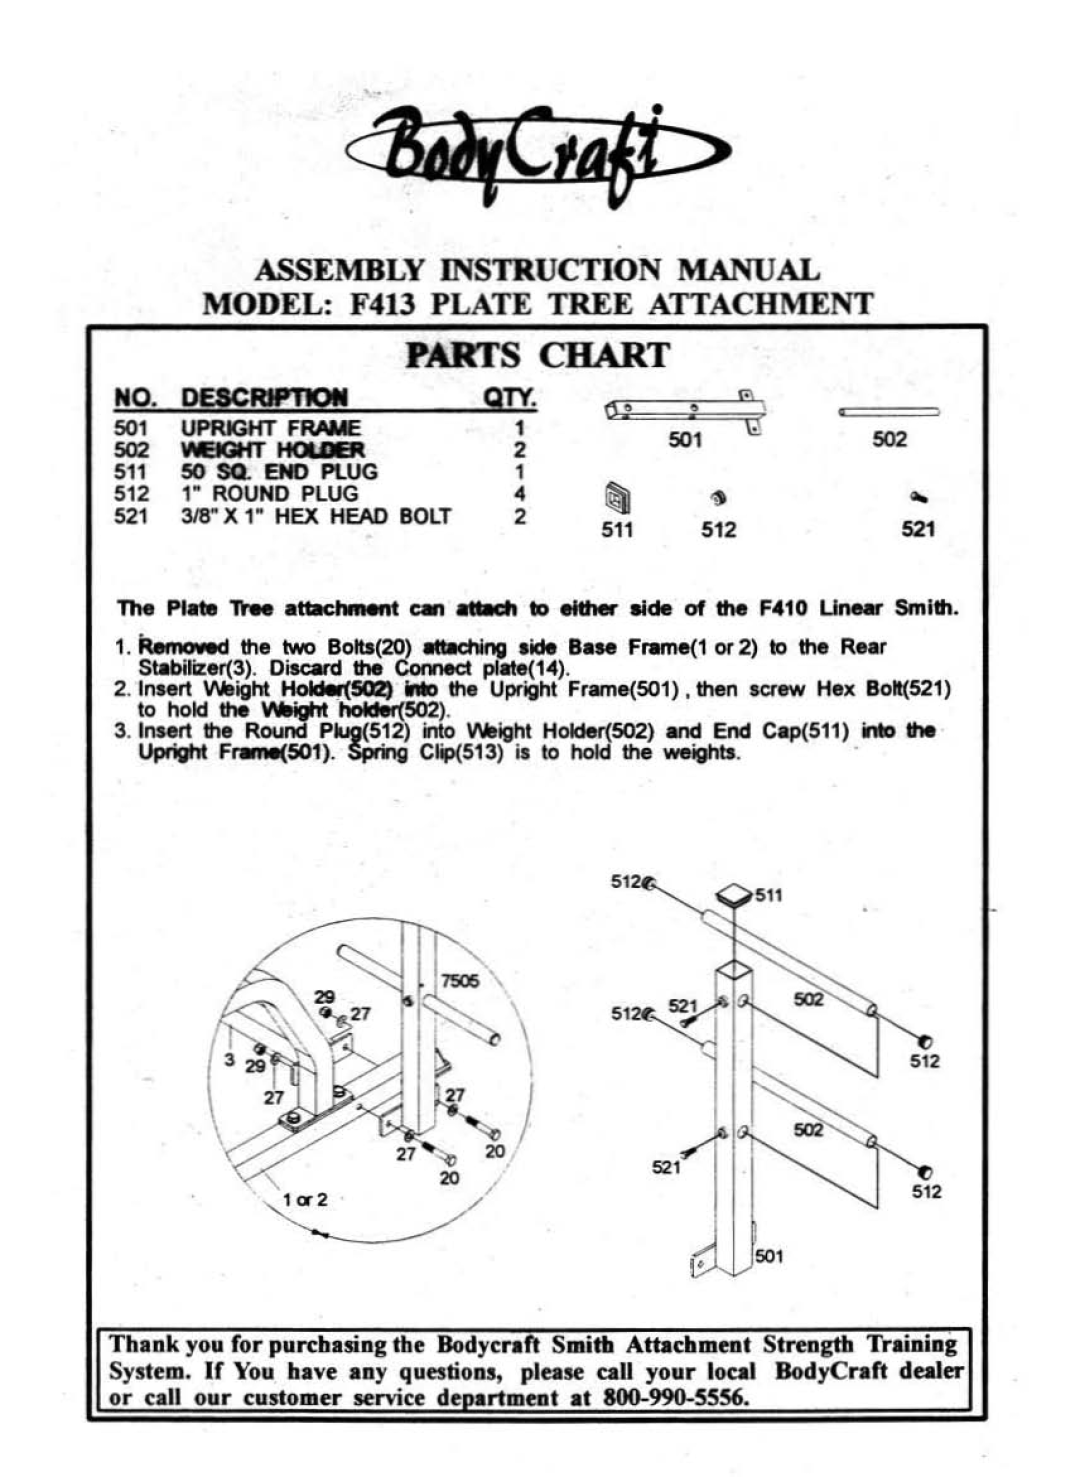 BodyCraft F413 manual ogciW.g, Parts Chart, UPfUGHT FRAME, tE&QHTHCC A, SO sa. END PlUG, The Ptn. no- an.ctwMnt c.n 